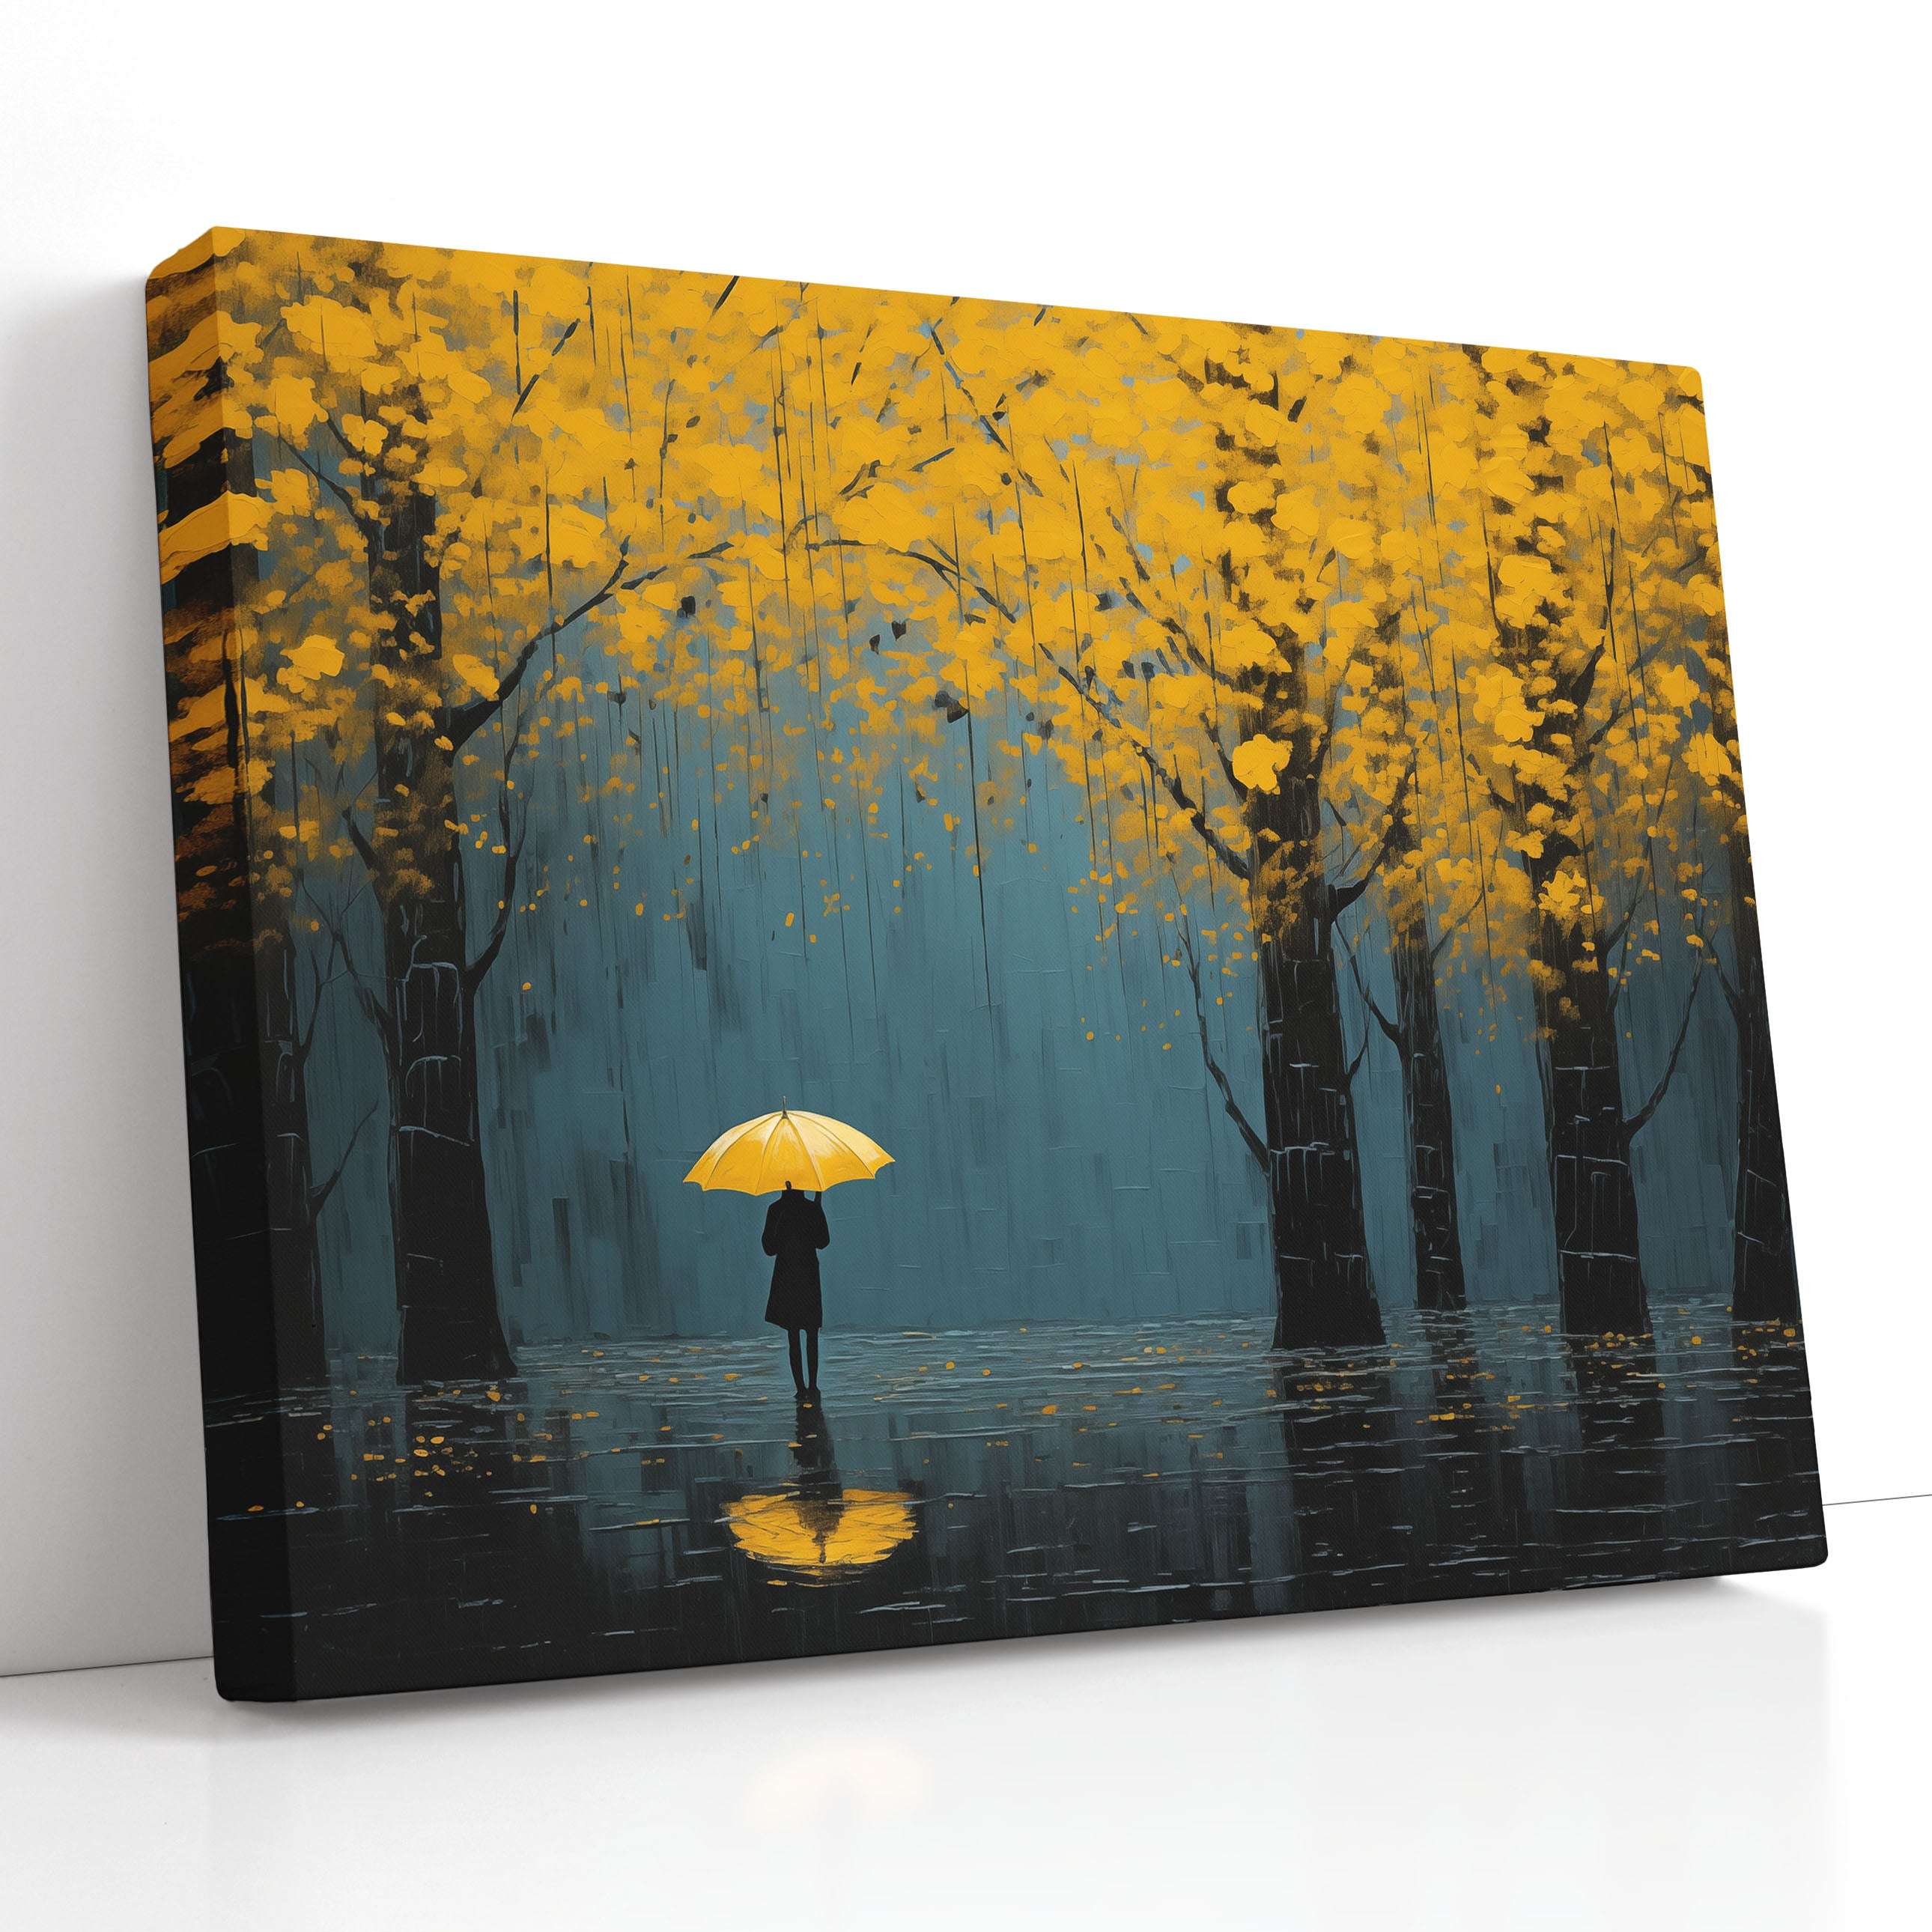 Yellow Umbrella in Rain - Canvas Print - Artoholica Ready to Hang Canvas Print